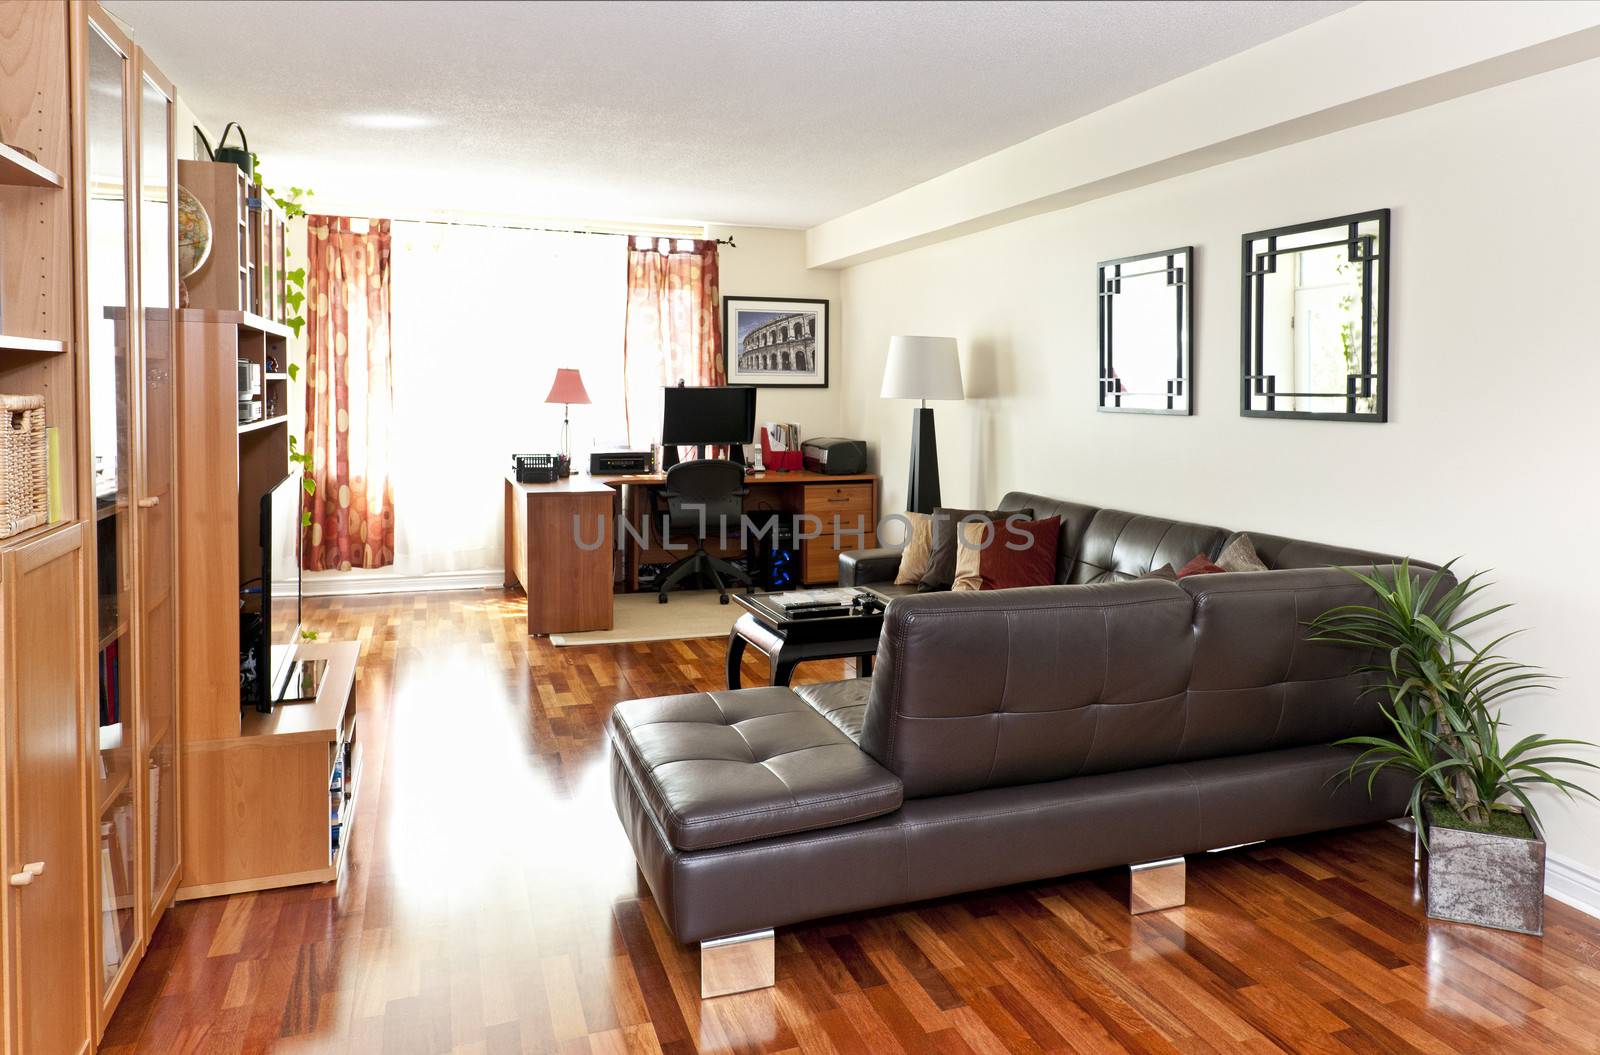 Living room with hardwood floor - artwork is from photographer portfolio